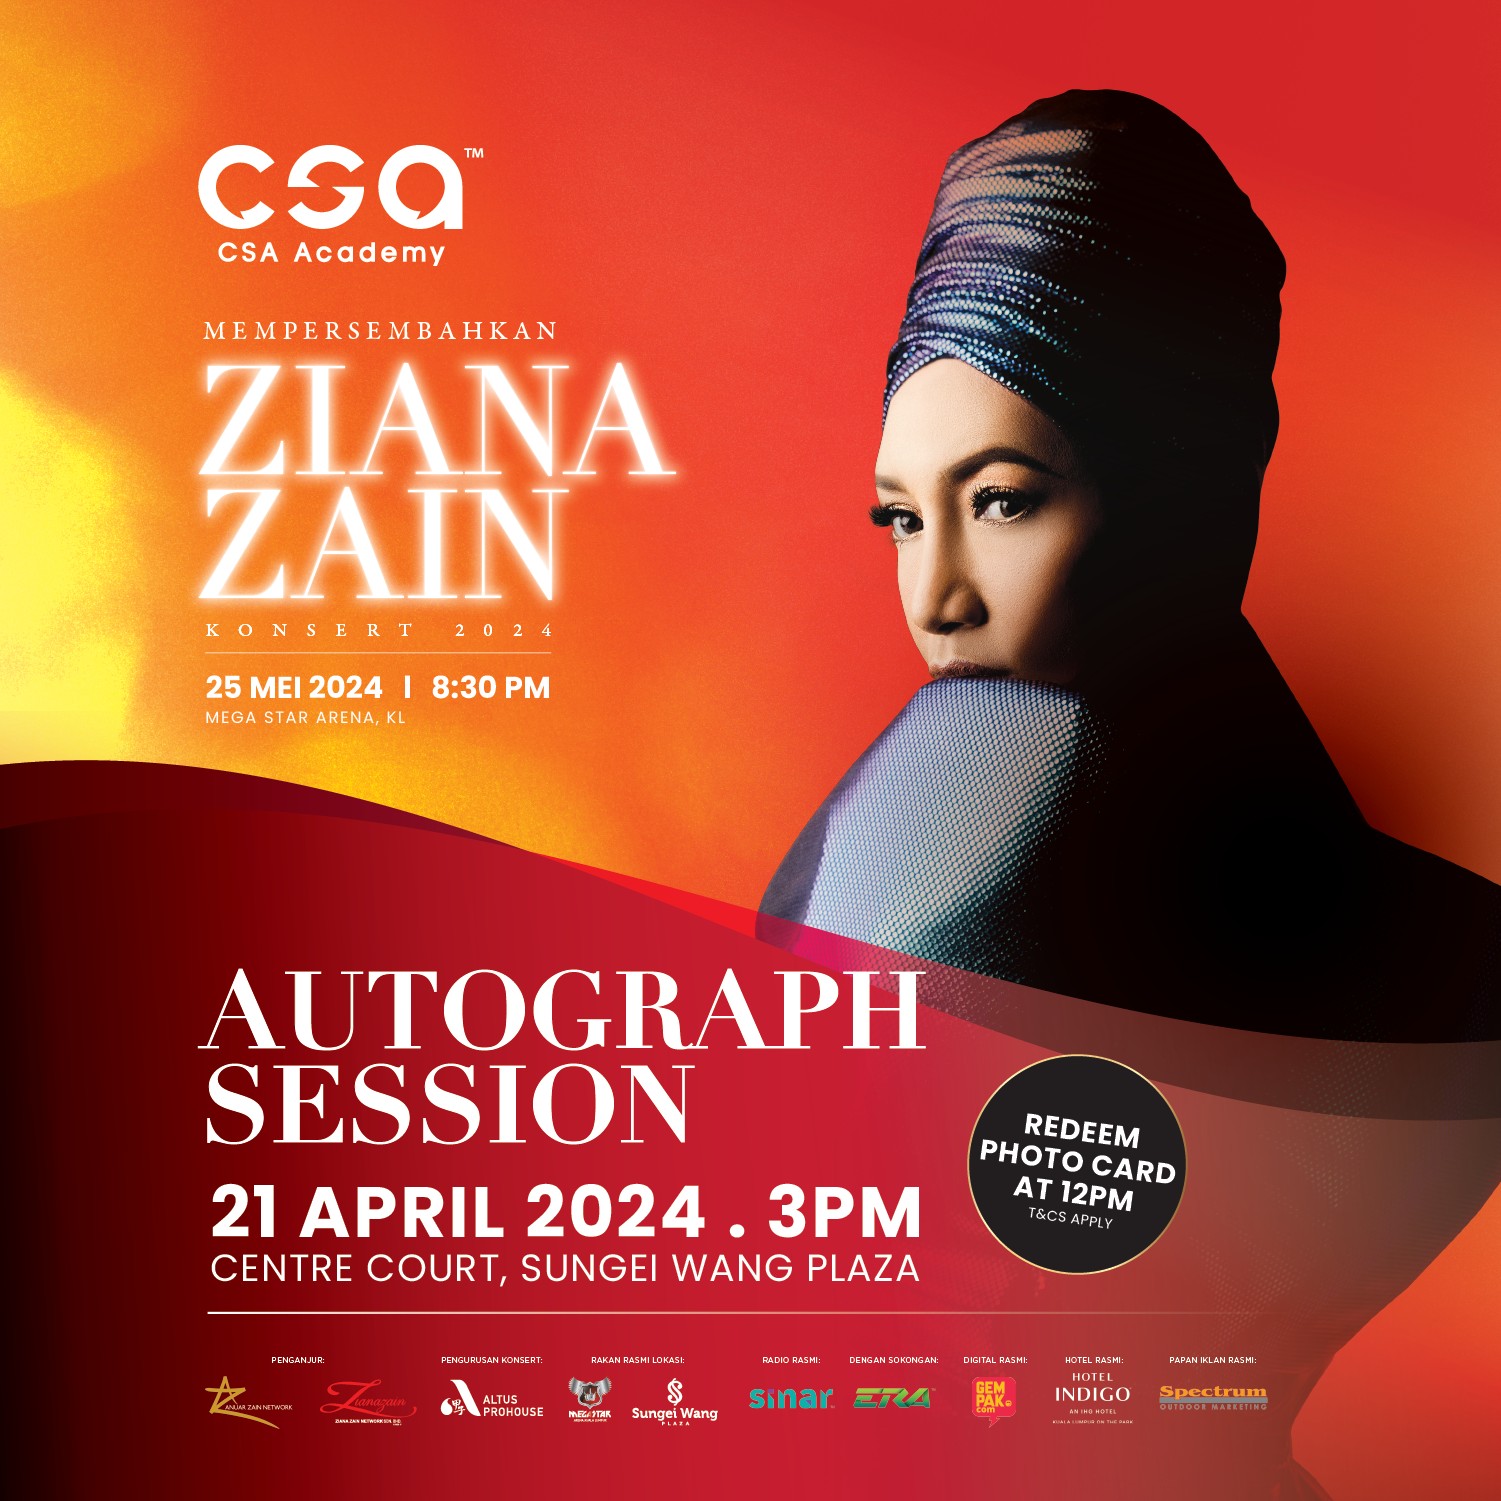 Ziana Zain Concert 2024